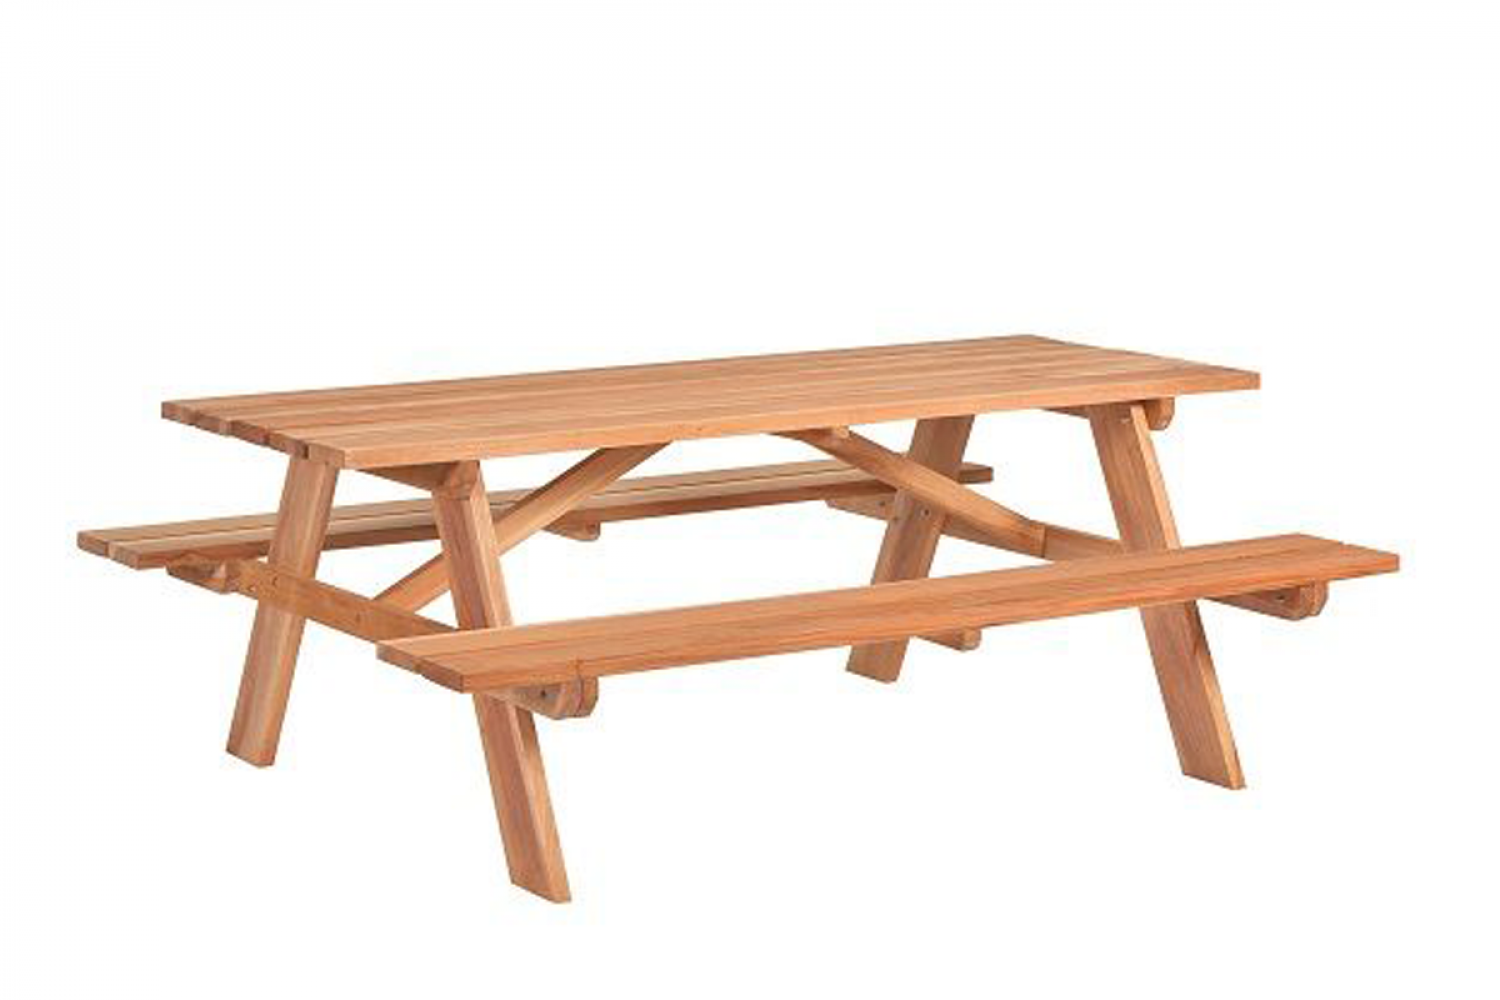 Hardhouten picknicktafel business 200x160x75 cm - Licht beschadigd - SALE01855